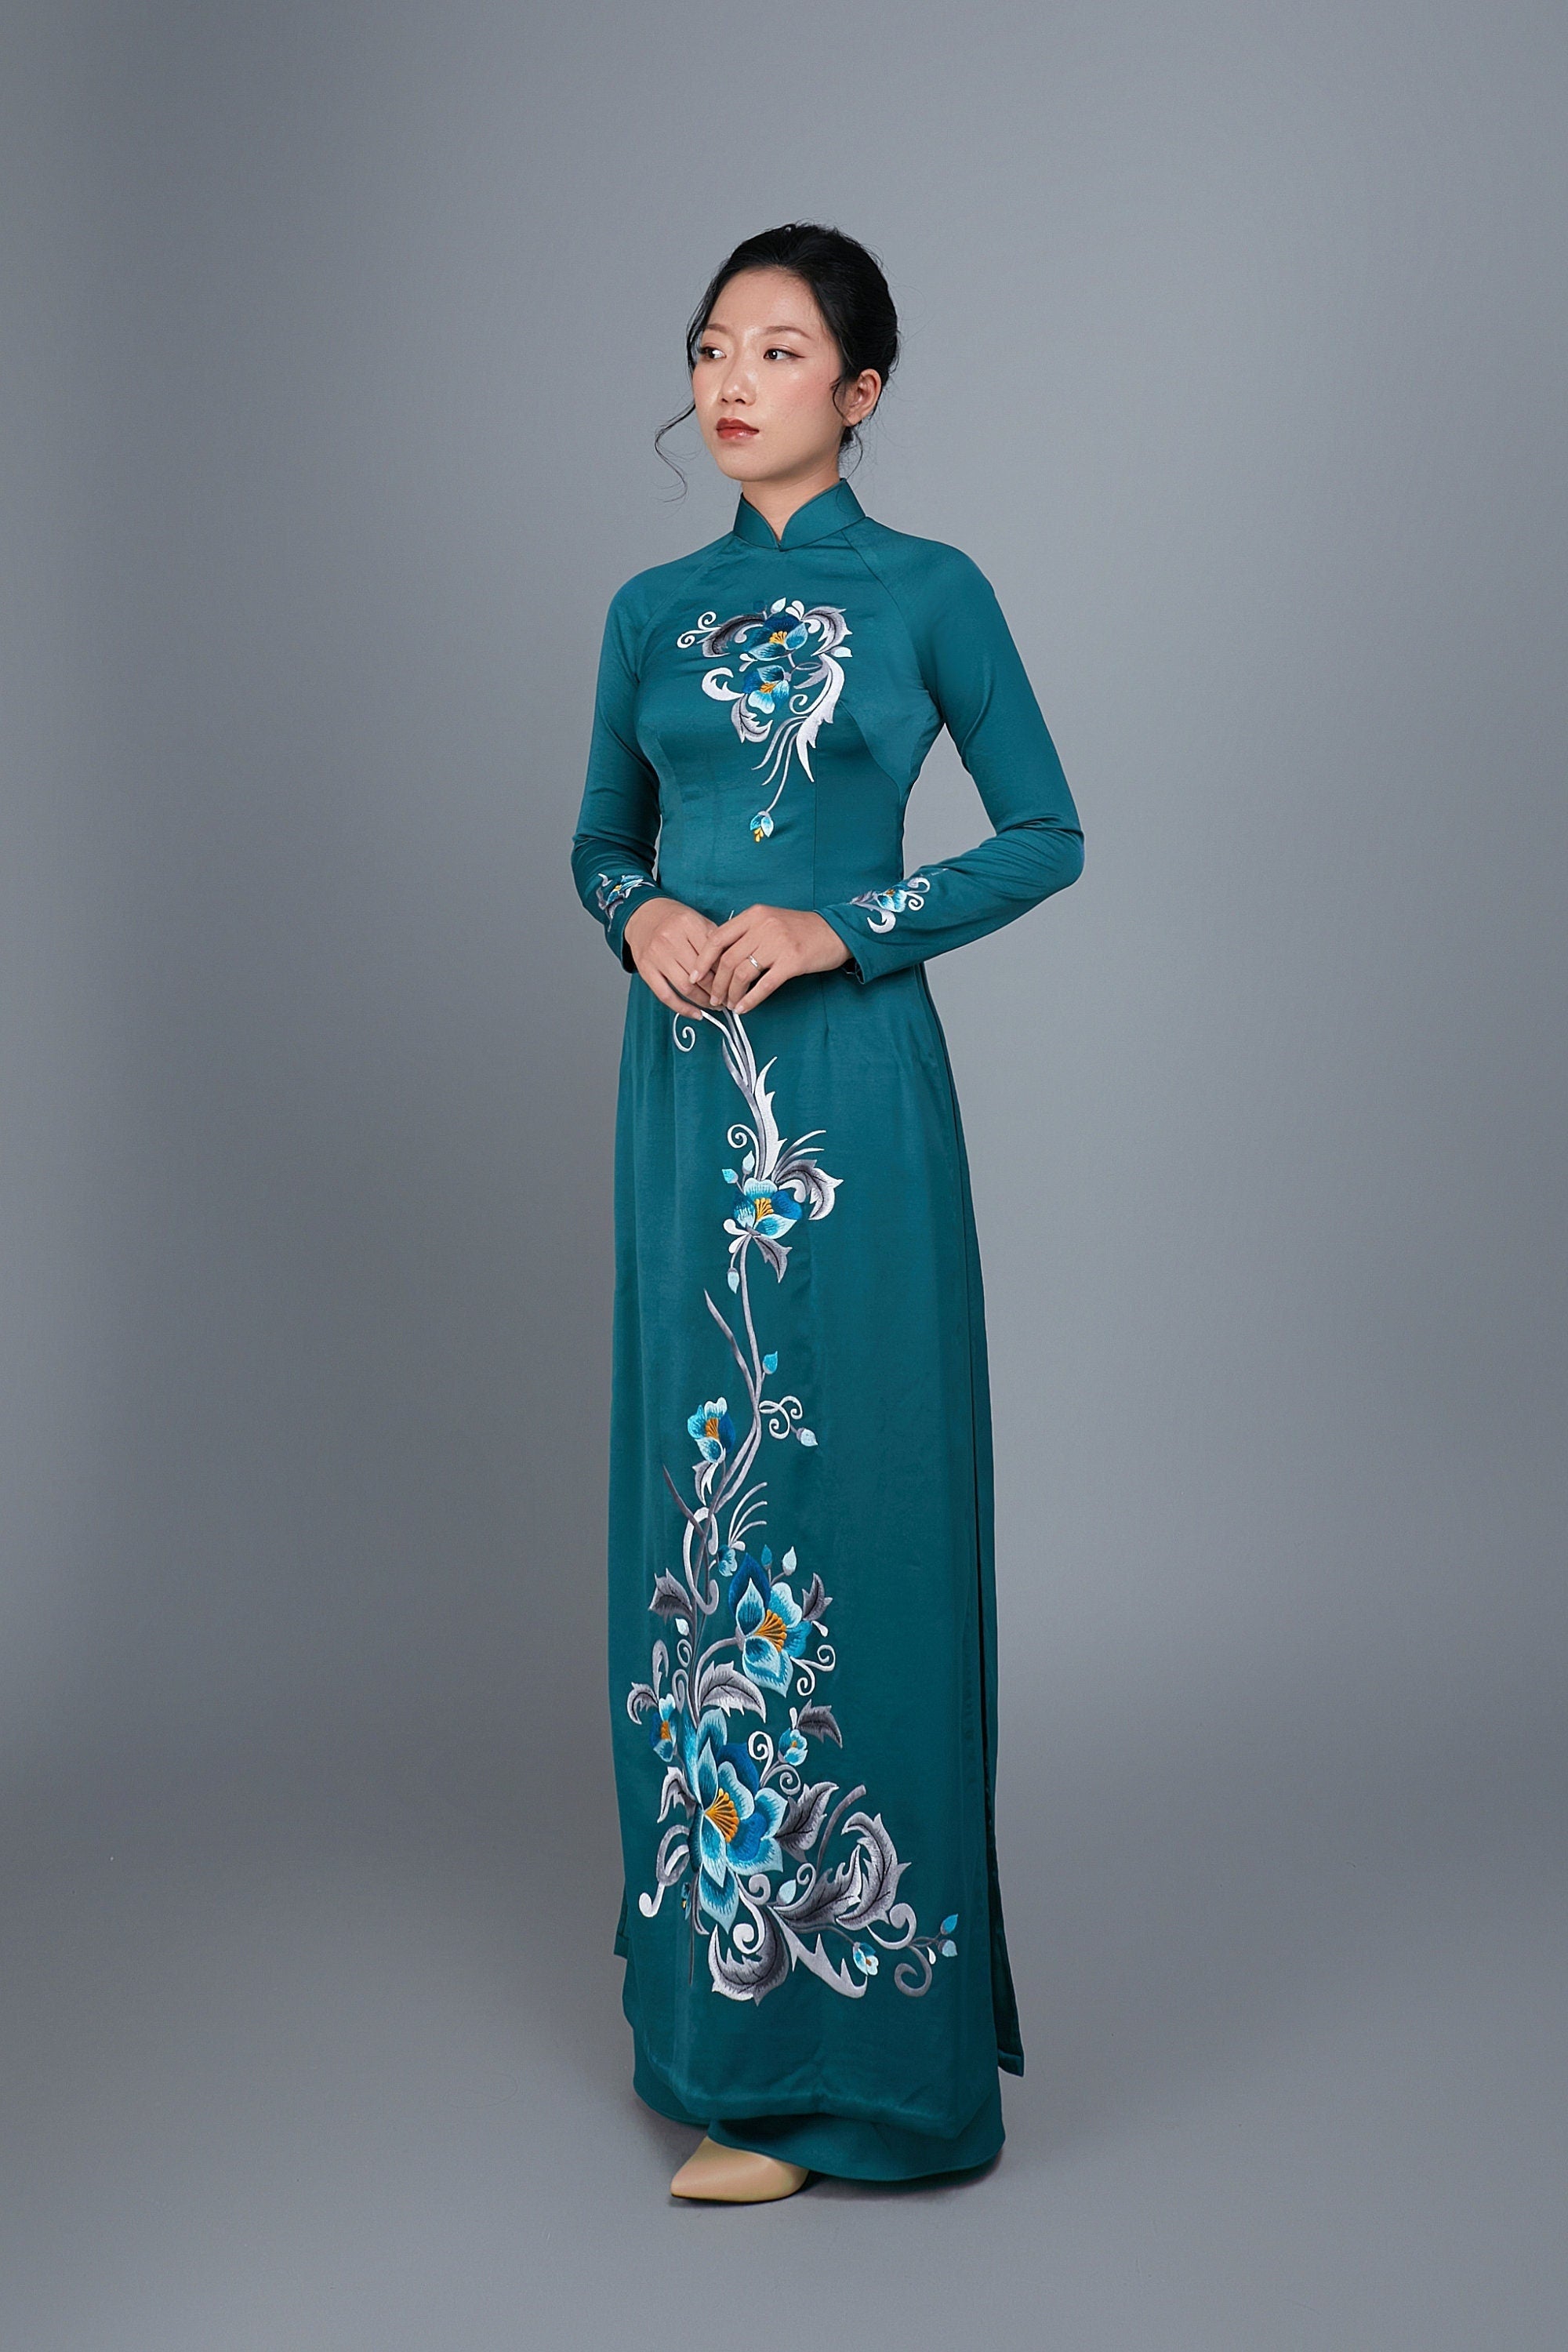 Women's ao dai dress Vietnamese traditional long dress. High